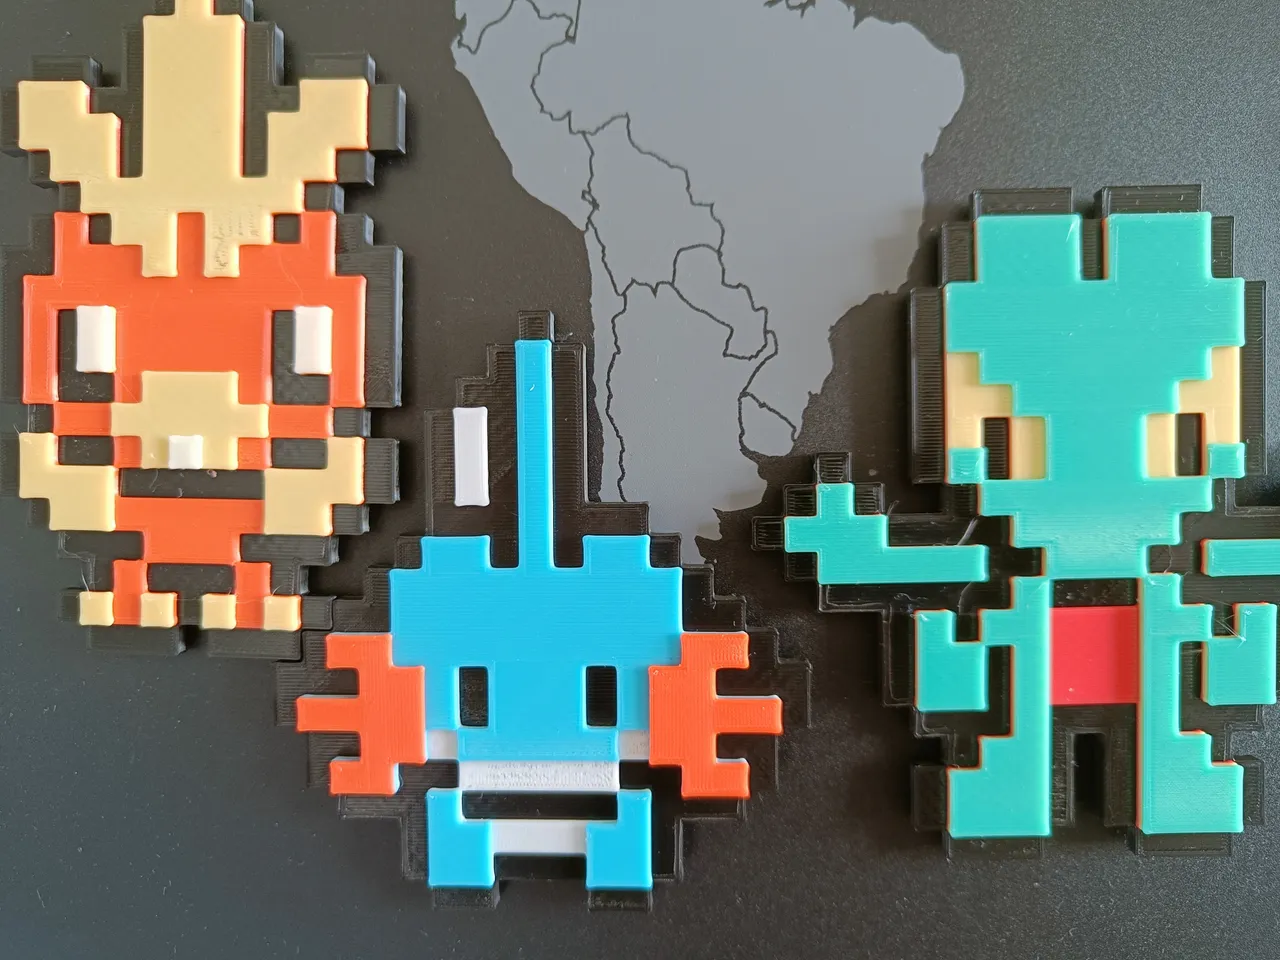 pixel art templates pokemon mudkip